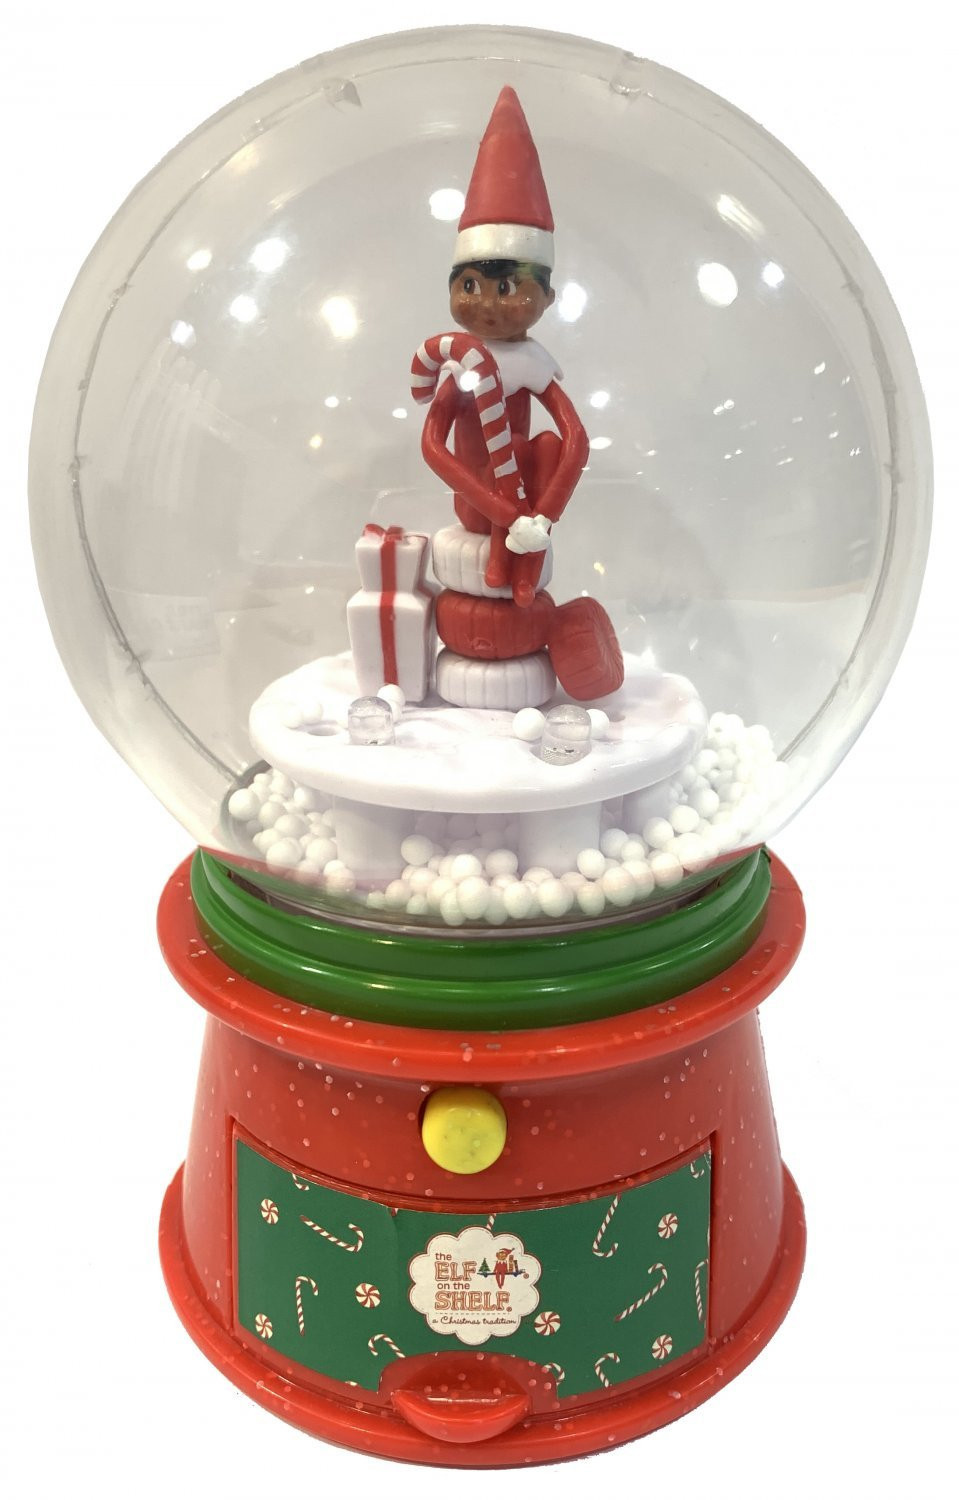 The Elf on the Shelf® Snow Globe